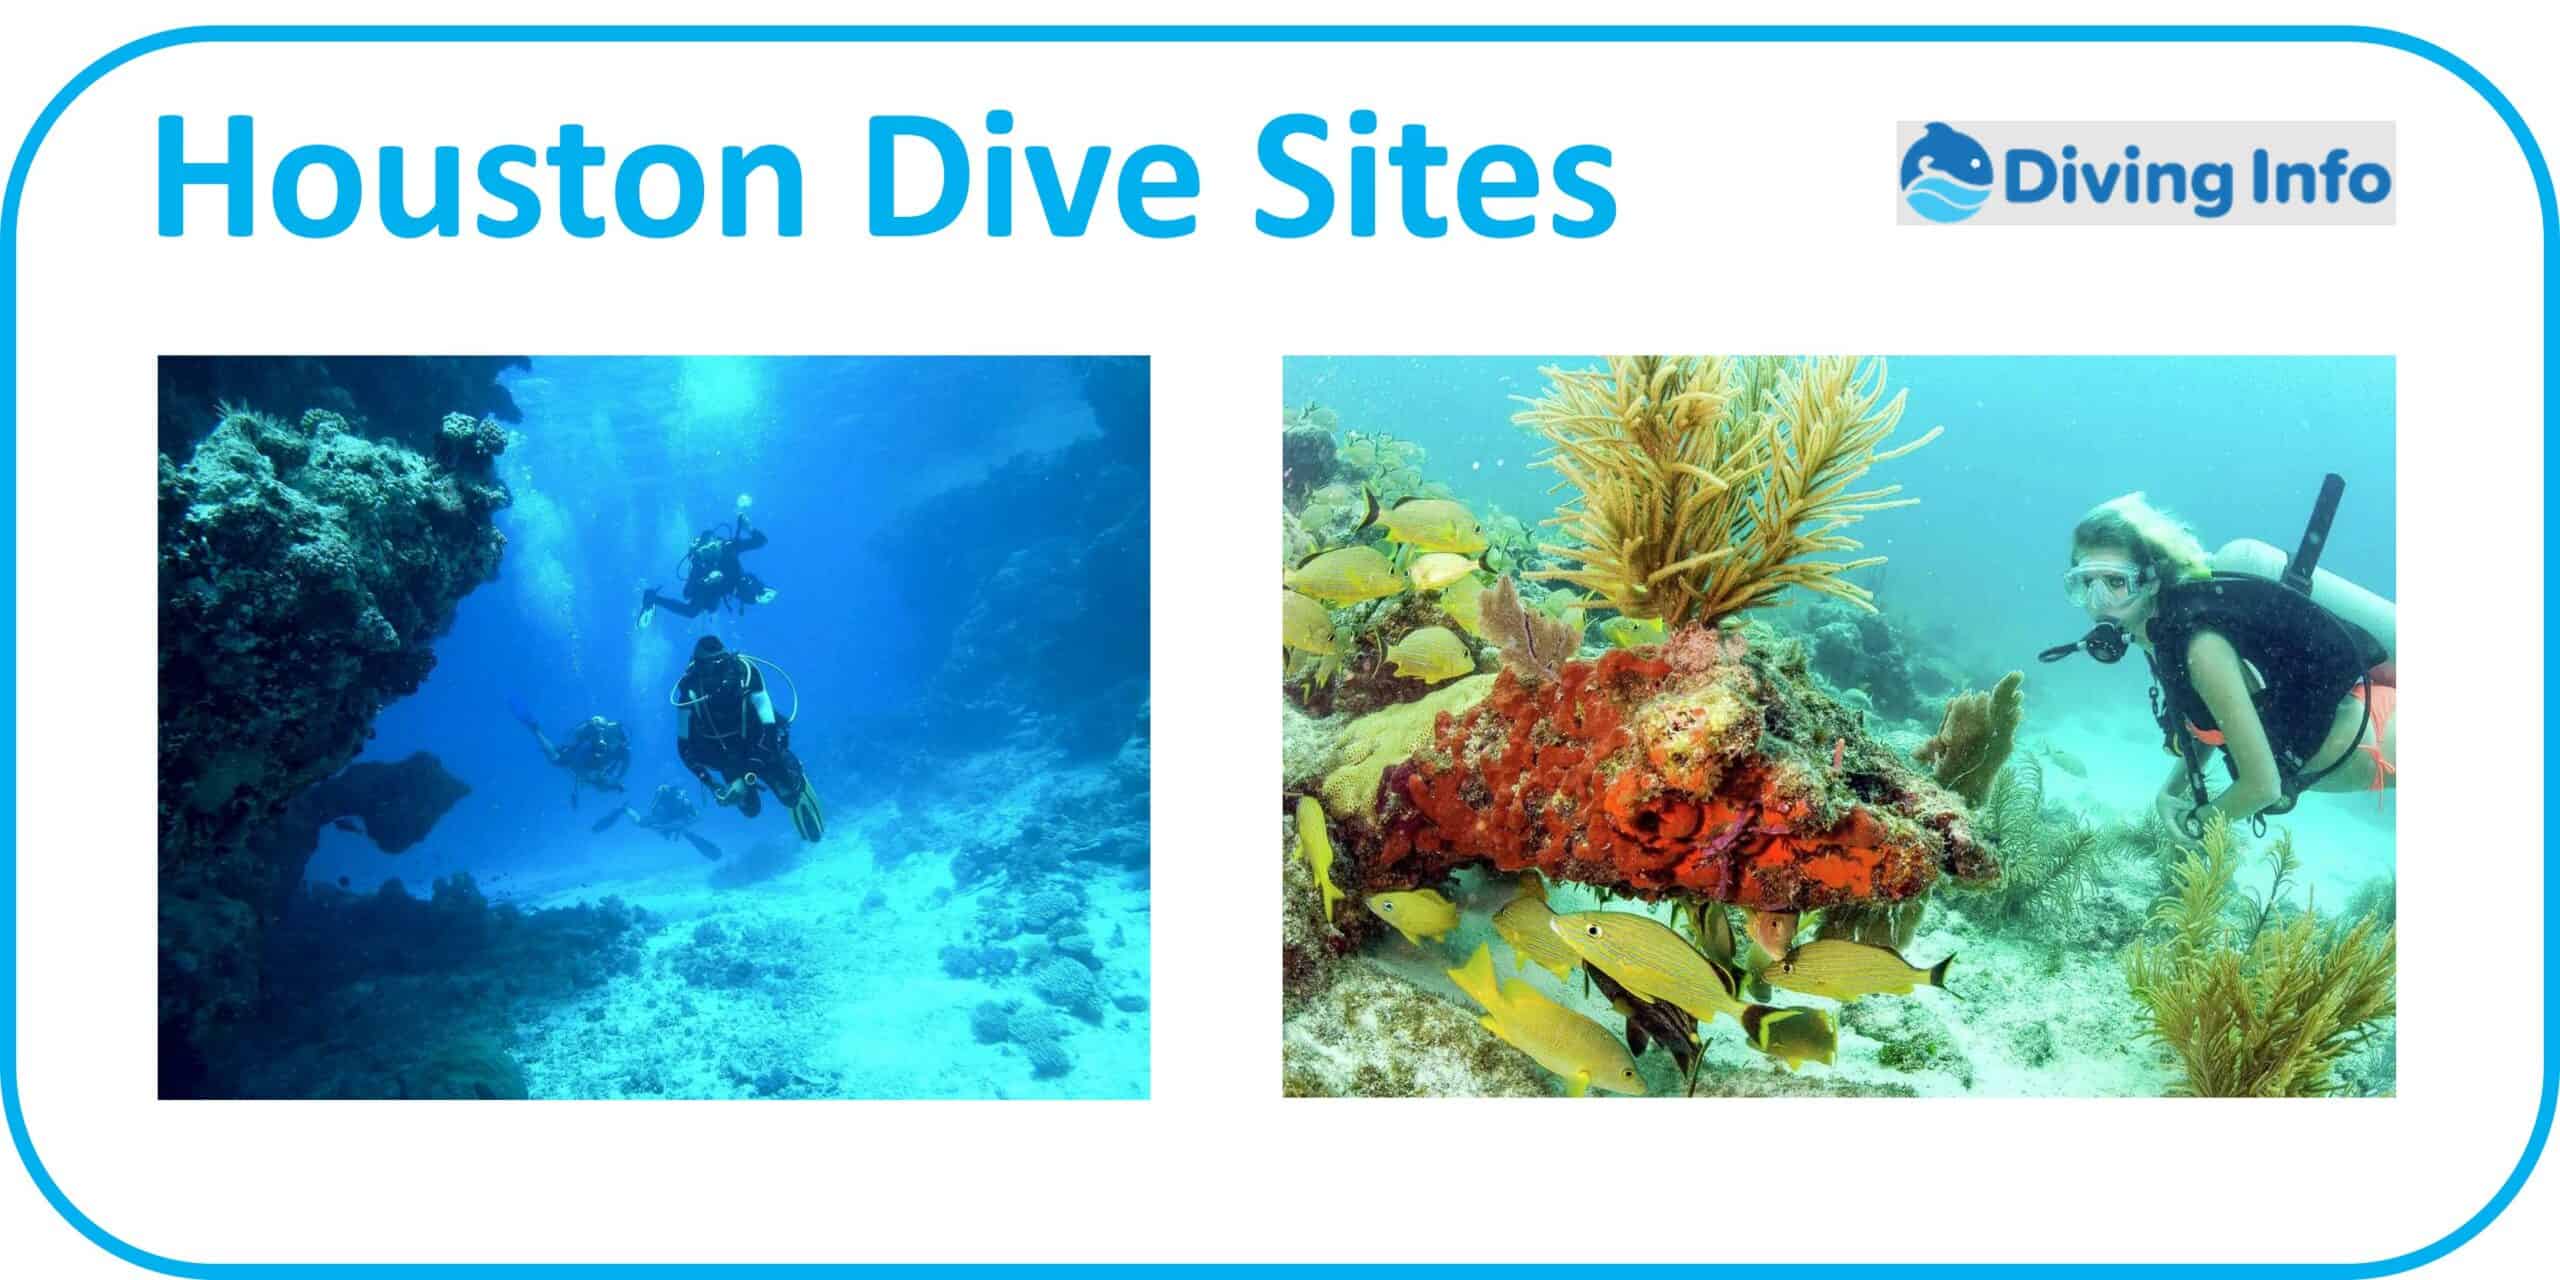 Houston Dive Sites